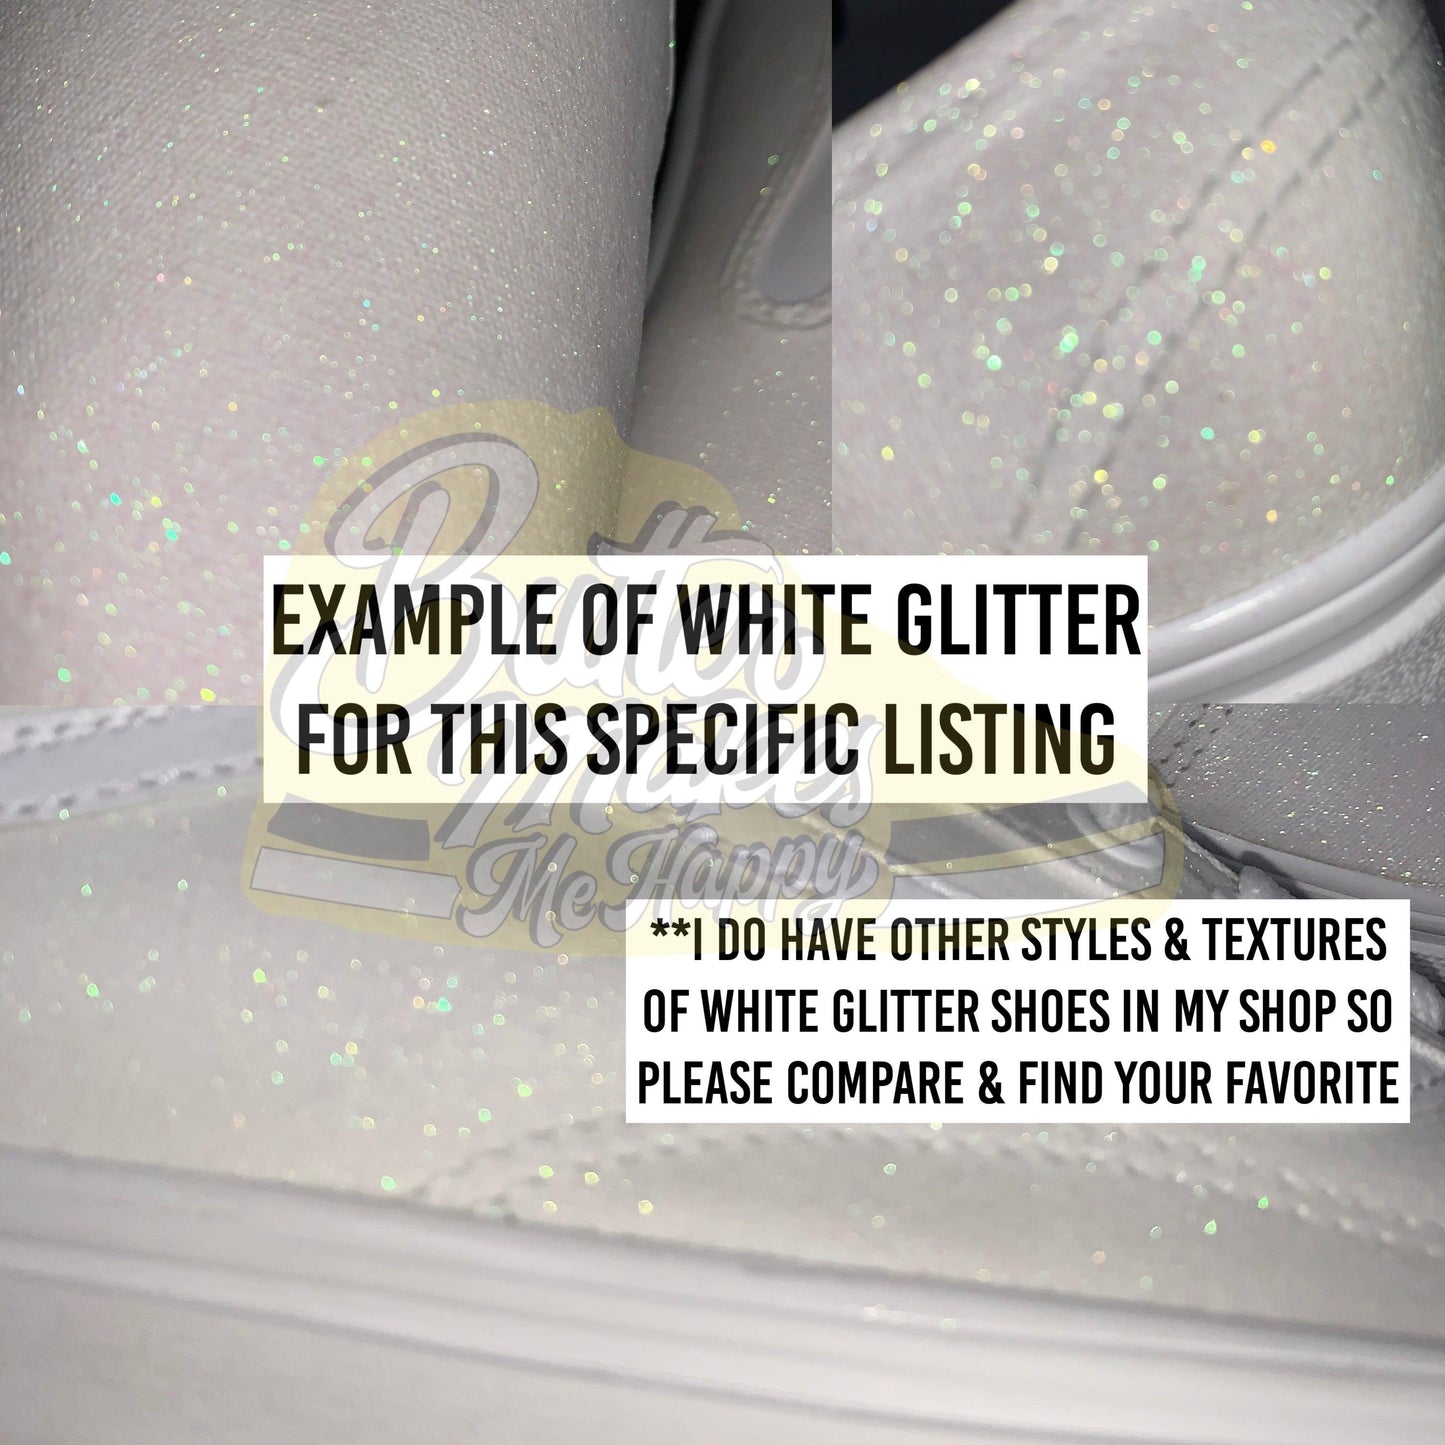 White Glitter Vans - ButterMakesMeHappy